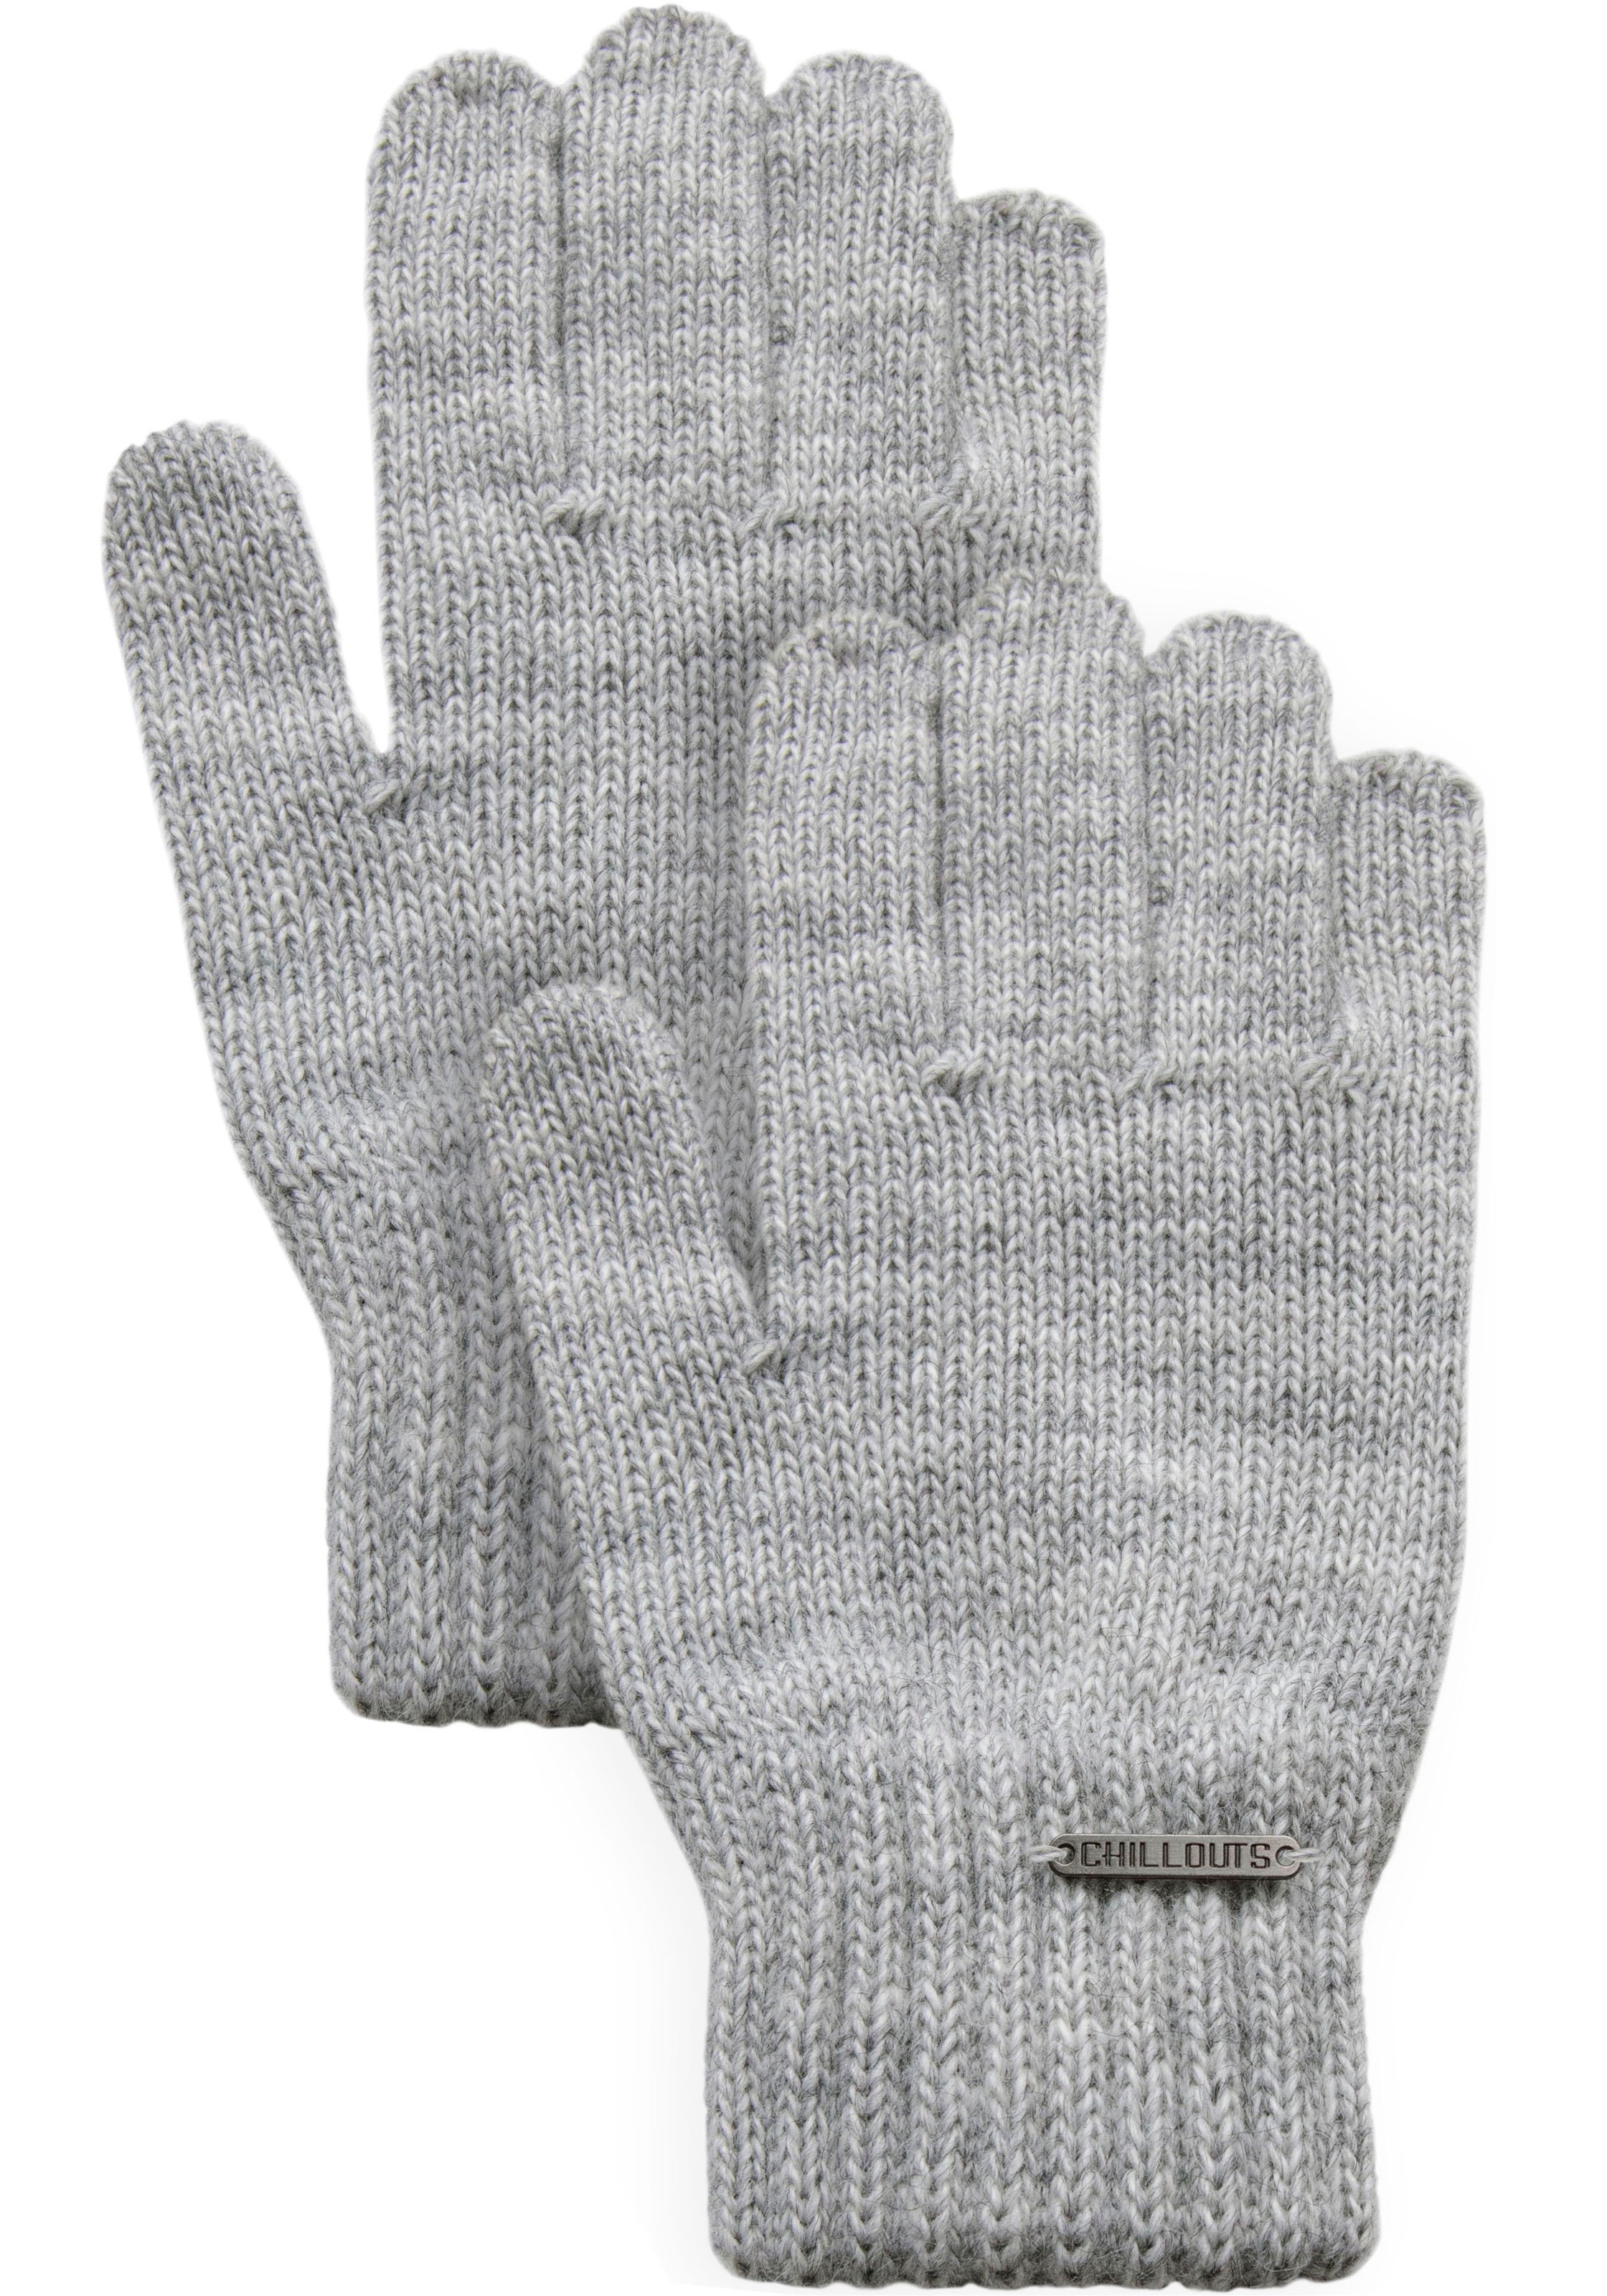 gestrickt | chillouts für »Jamila BAUR Glove«, Strickhandschuhe Fingerhandschuhe, bestellen